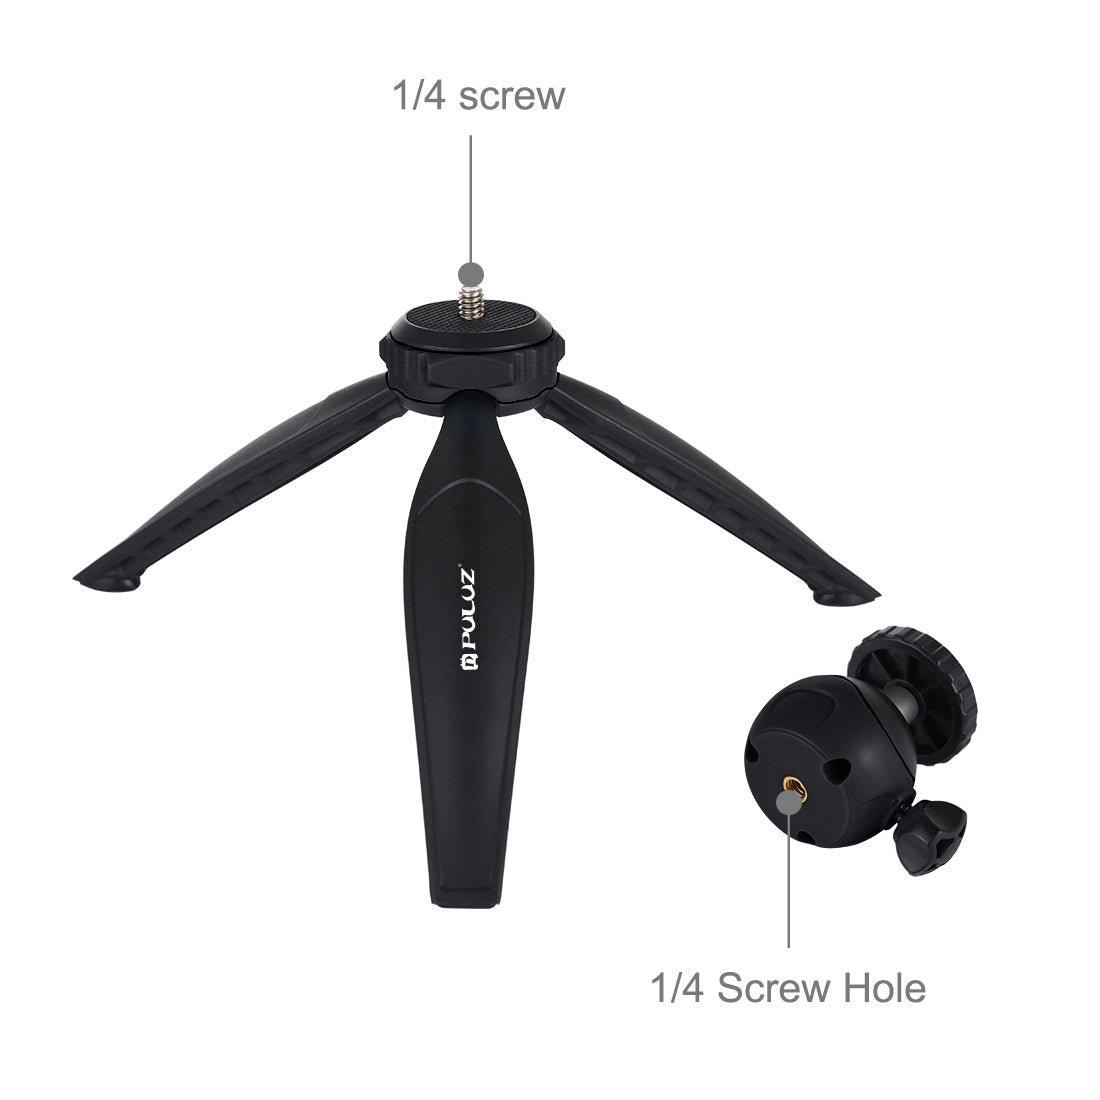 20cm Pocket Plastic Tripod Mount with 360 Degree Ball Head for Smartphones, GoPro, DSLR Cameras(Black)